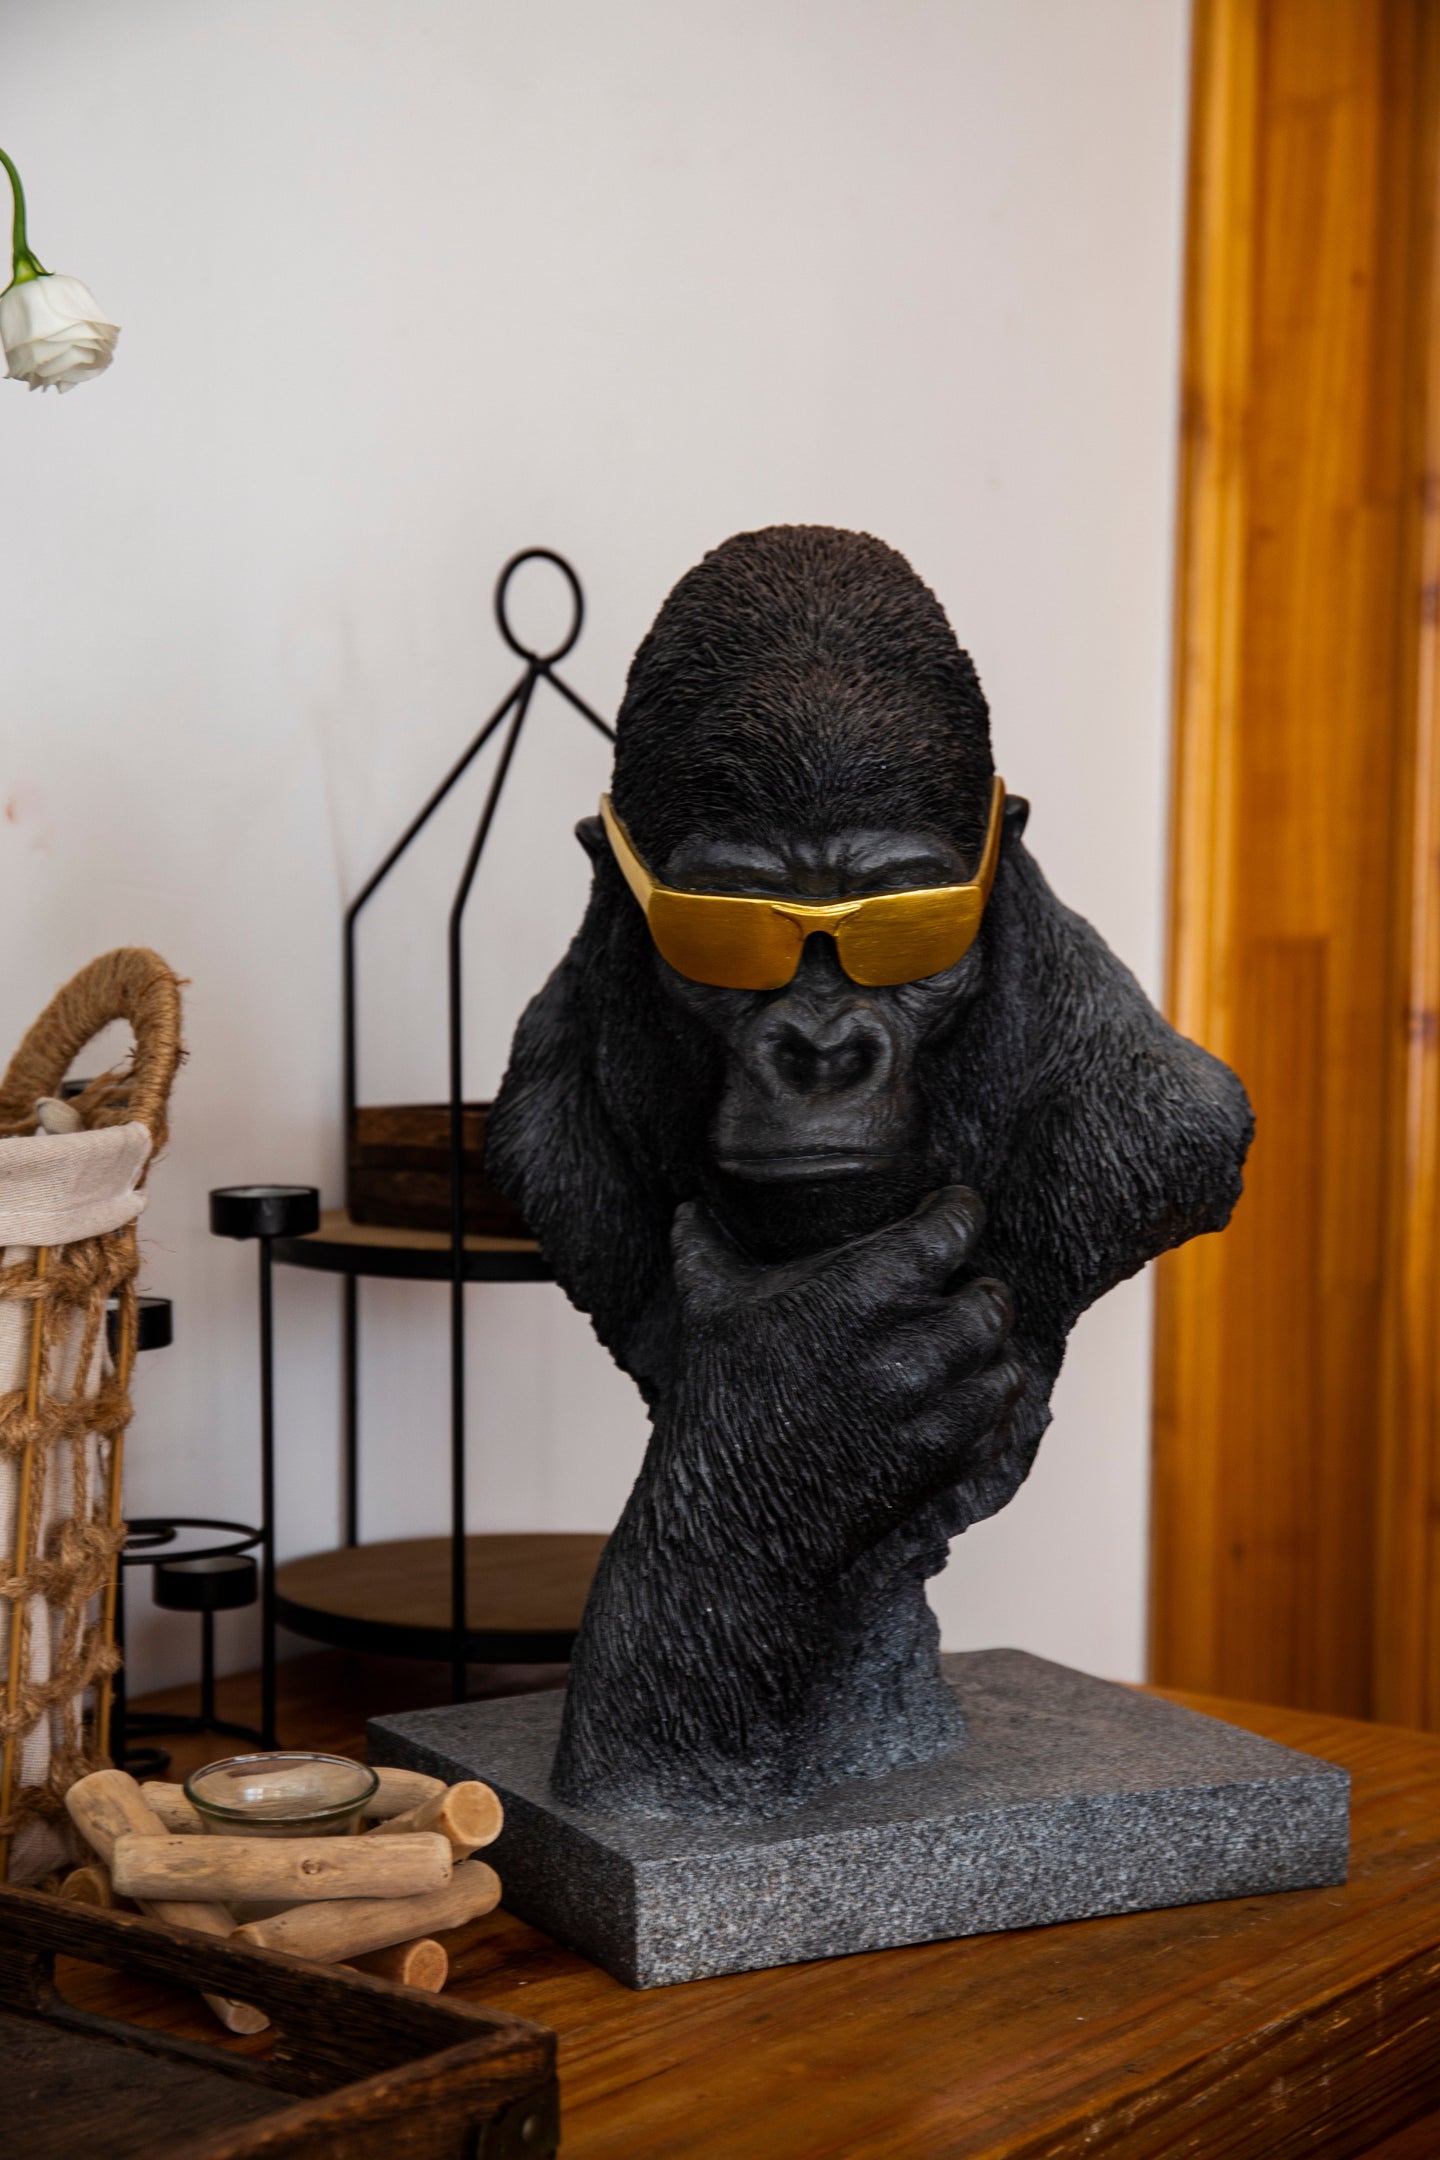 87636-B - Gorilla Head With Golden Glasses